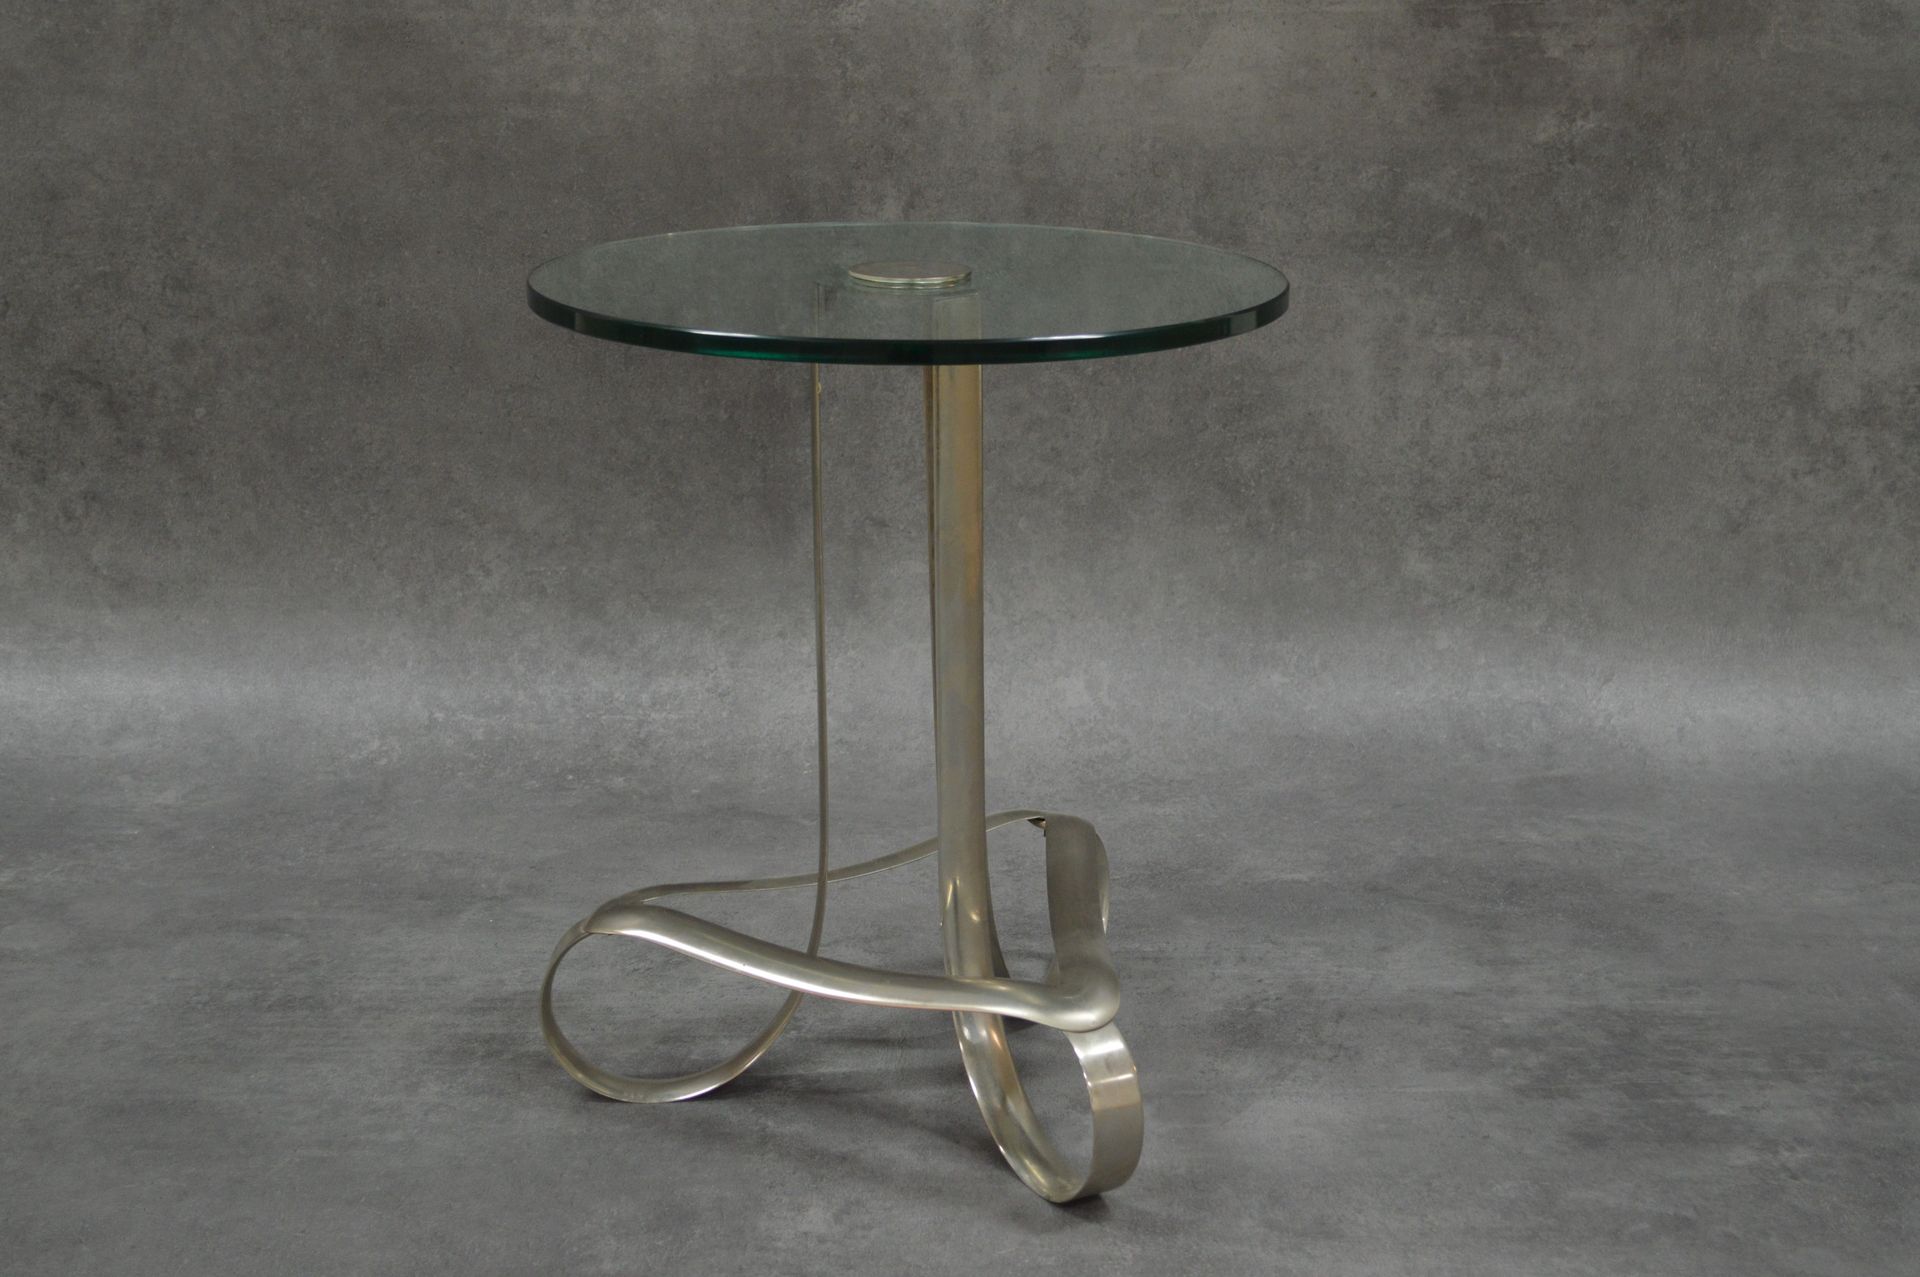 Guéridon tripode - Années 50 
宏伟的三脚架基座桌。圆形玻璃顶。金属底座。从
1950年代开始。托盘的尺寸：直径约50.5厘米。高度&hellip;